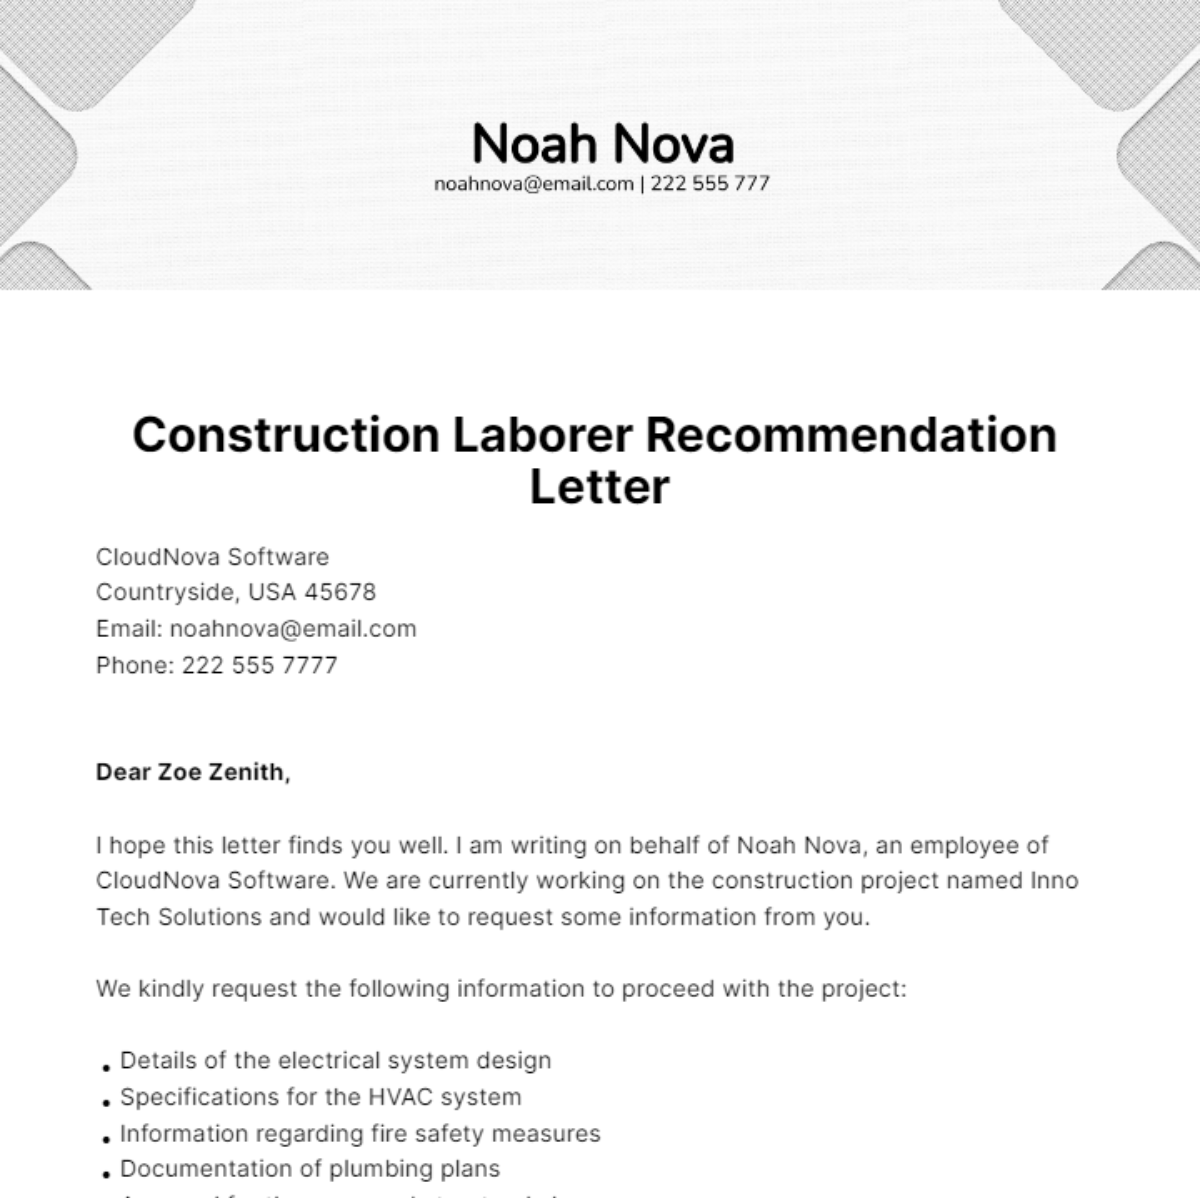 Construction Laborer Recommendation Letter Template